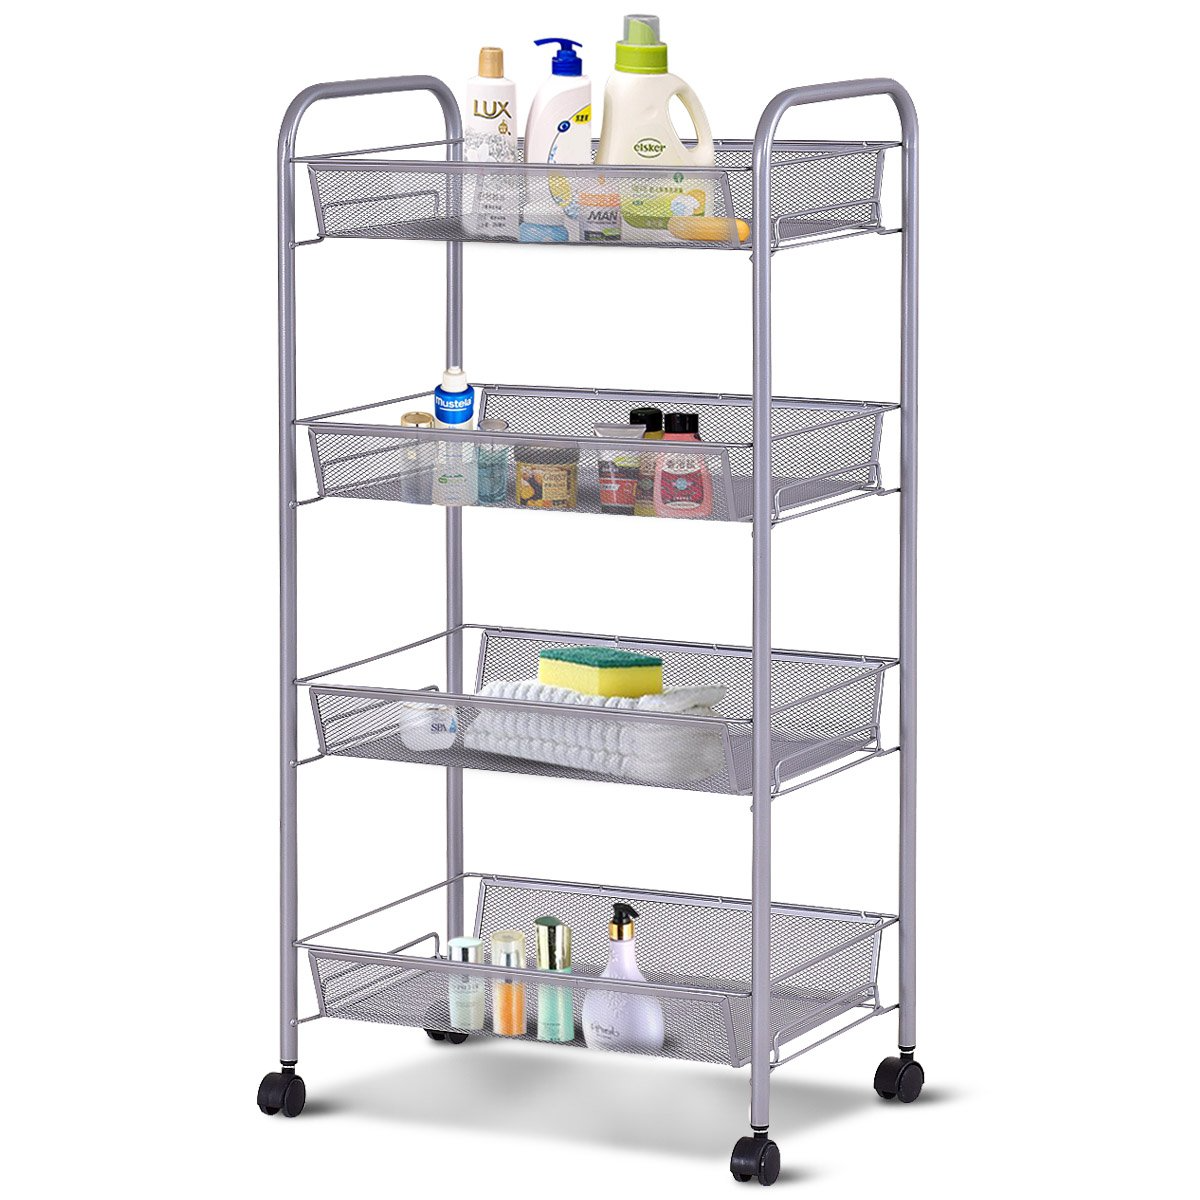 Giantex Storage Rack Trolley Cart Home Kitchen Organizer Utility Baskets (4 Tier, Silver)